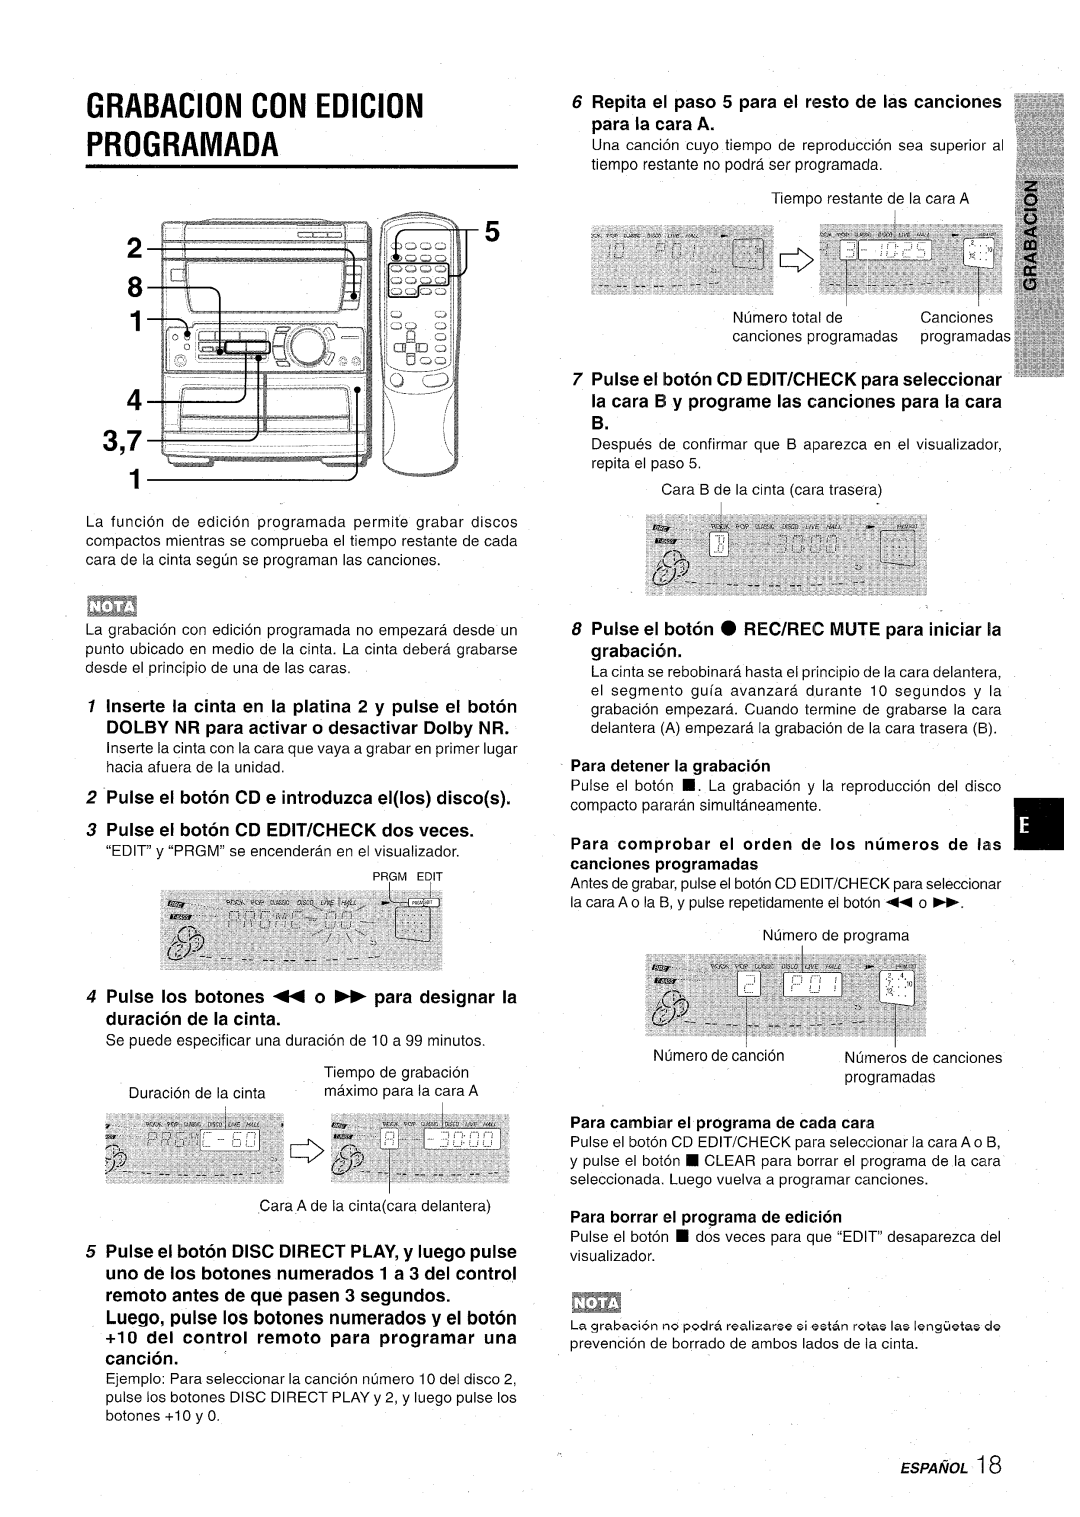 Aiwa CX-NA71 manual Grabacion Con Edicion Programada, Pulse el boton CD EDIT/CHECK dos veces 